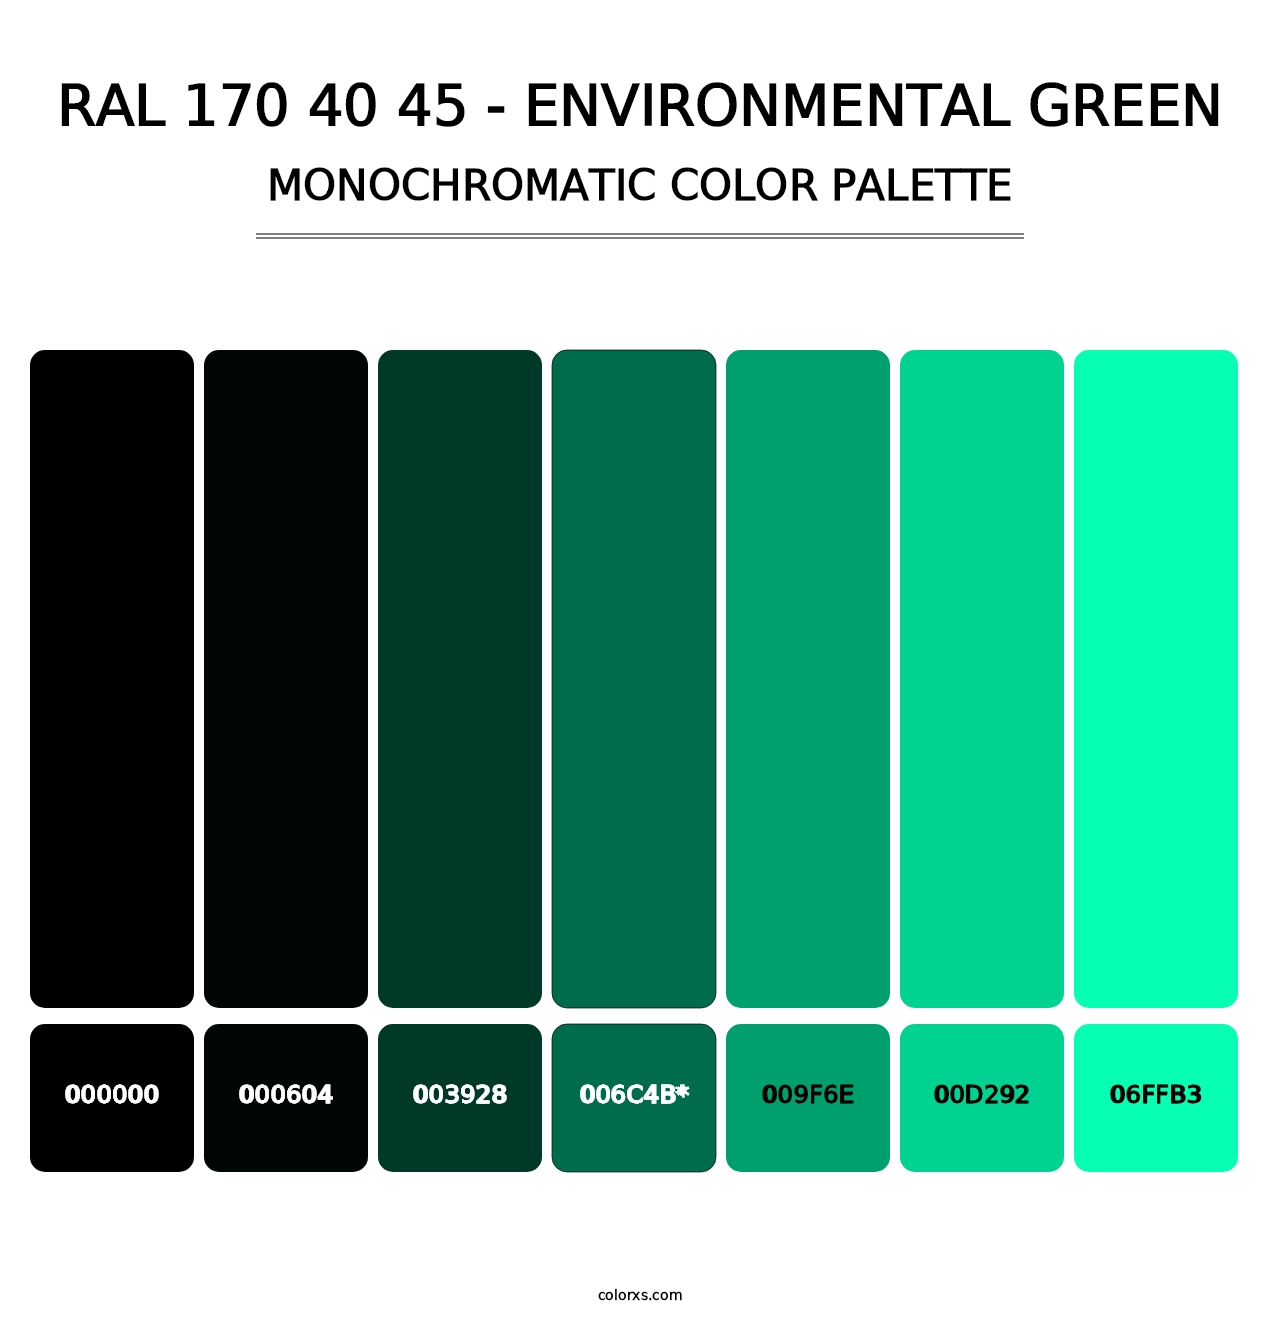 RAL 170 40 45 - Environmental Green - Monochromatic Color Palette